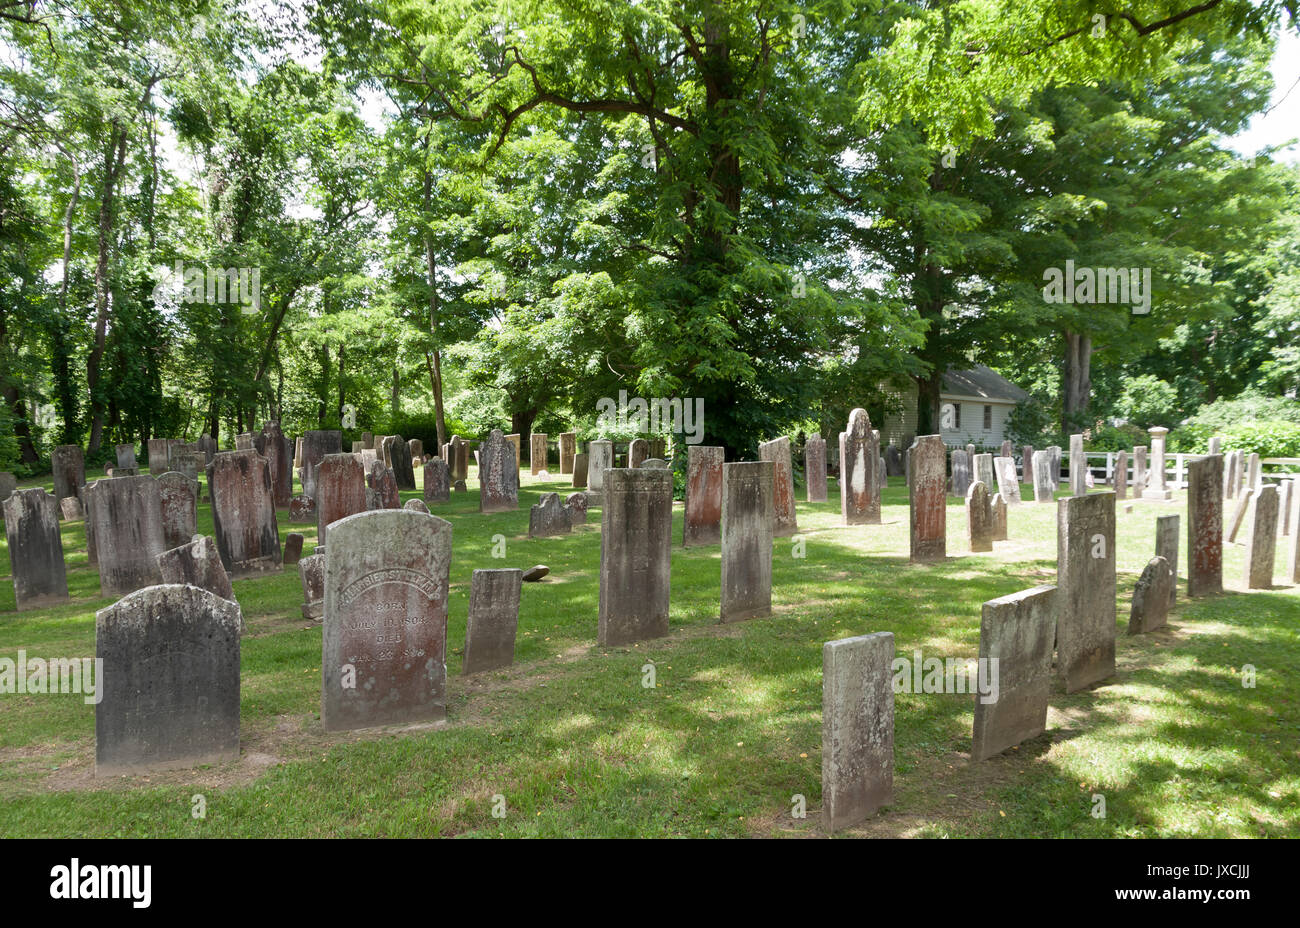 Gravestones in old cemetery, Sheffield, Massachusetts. Stock Photo